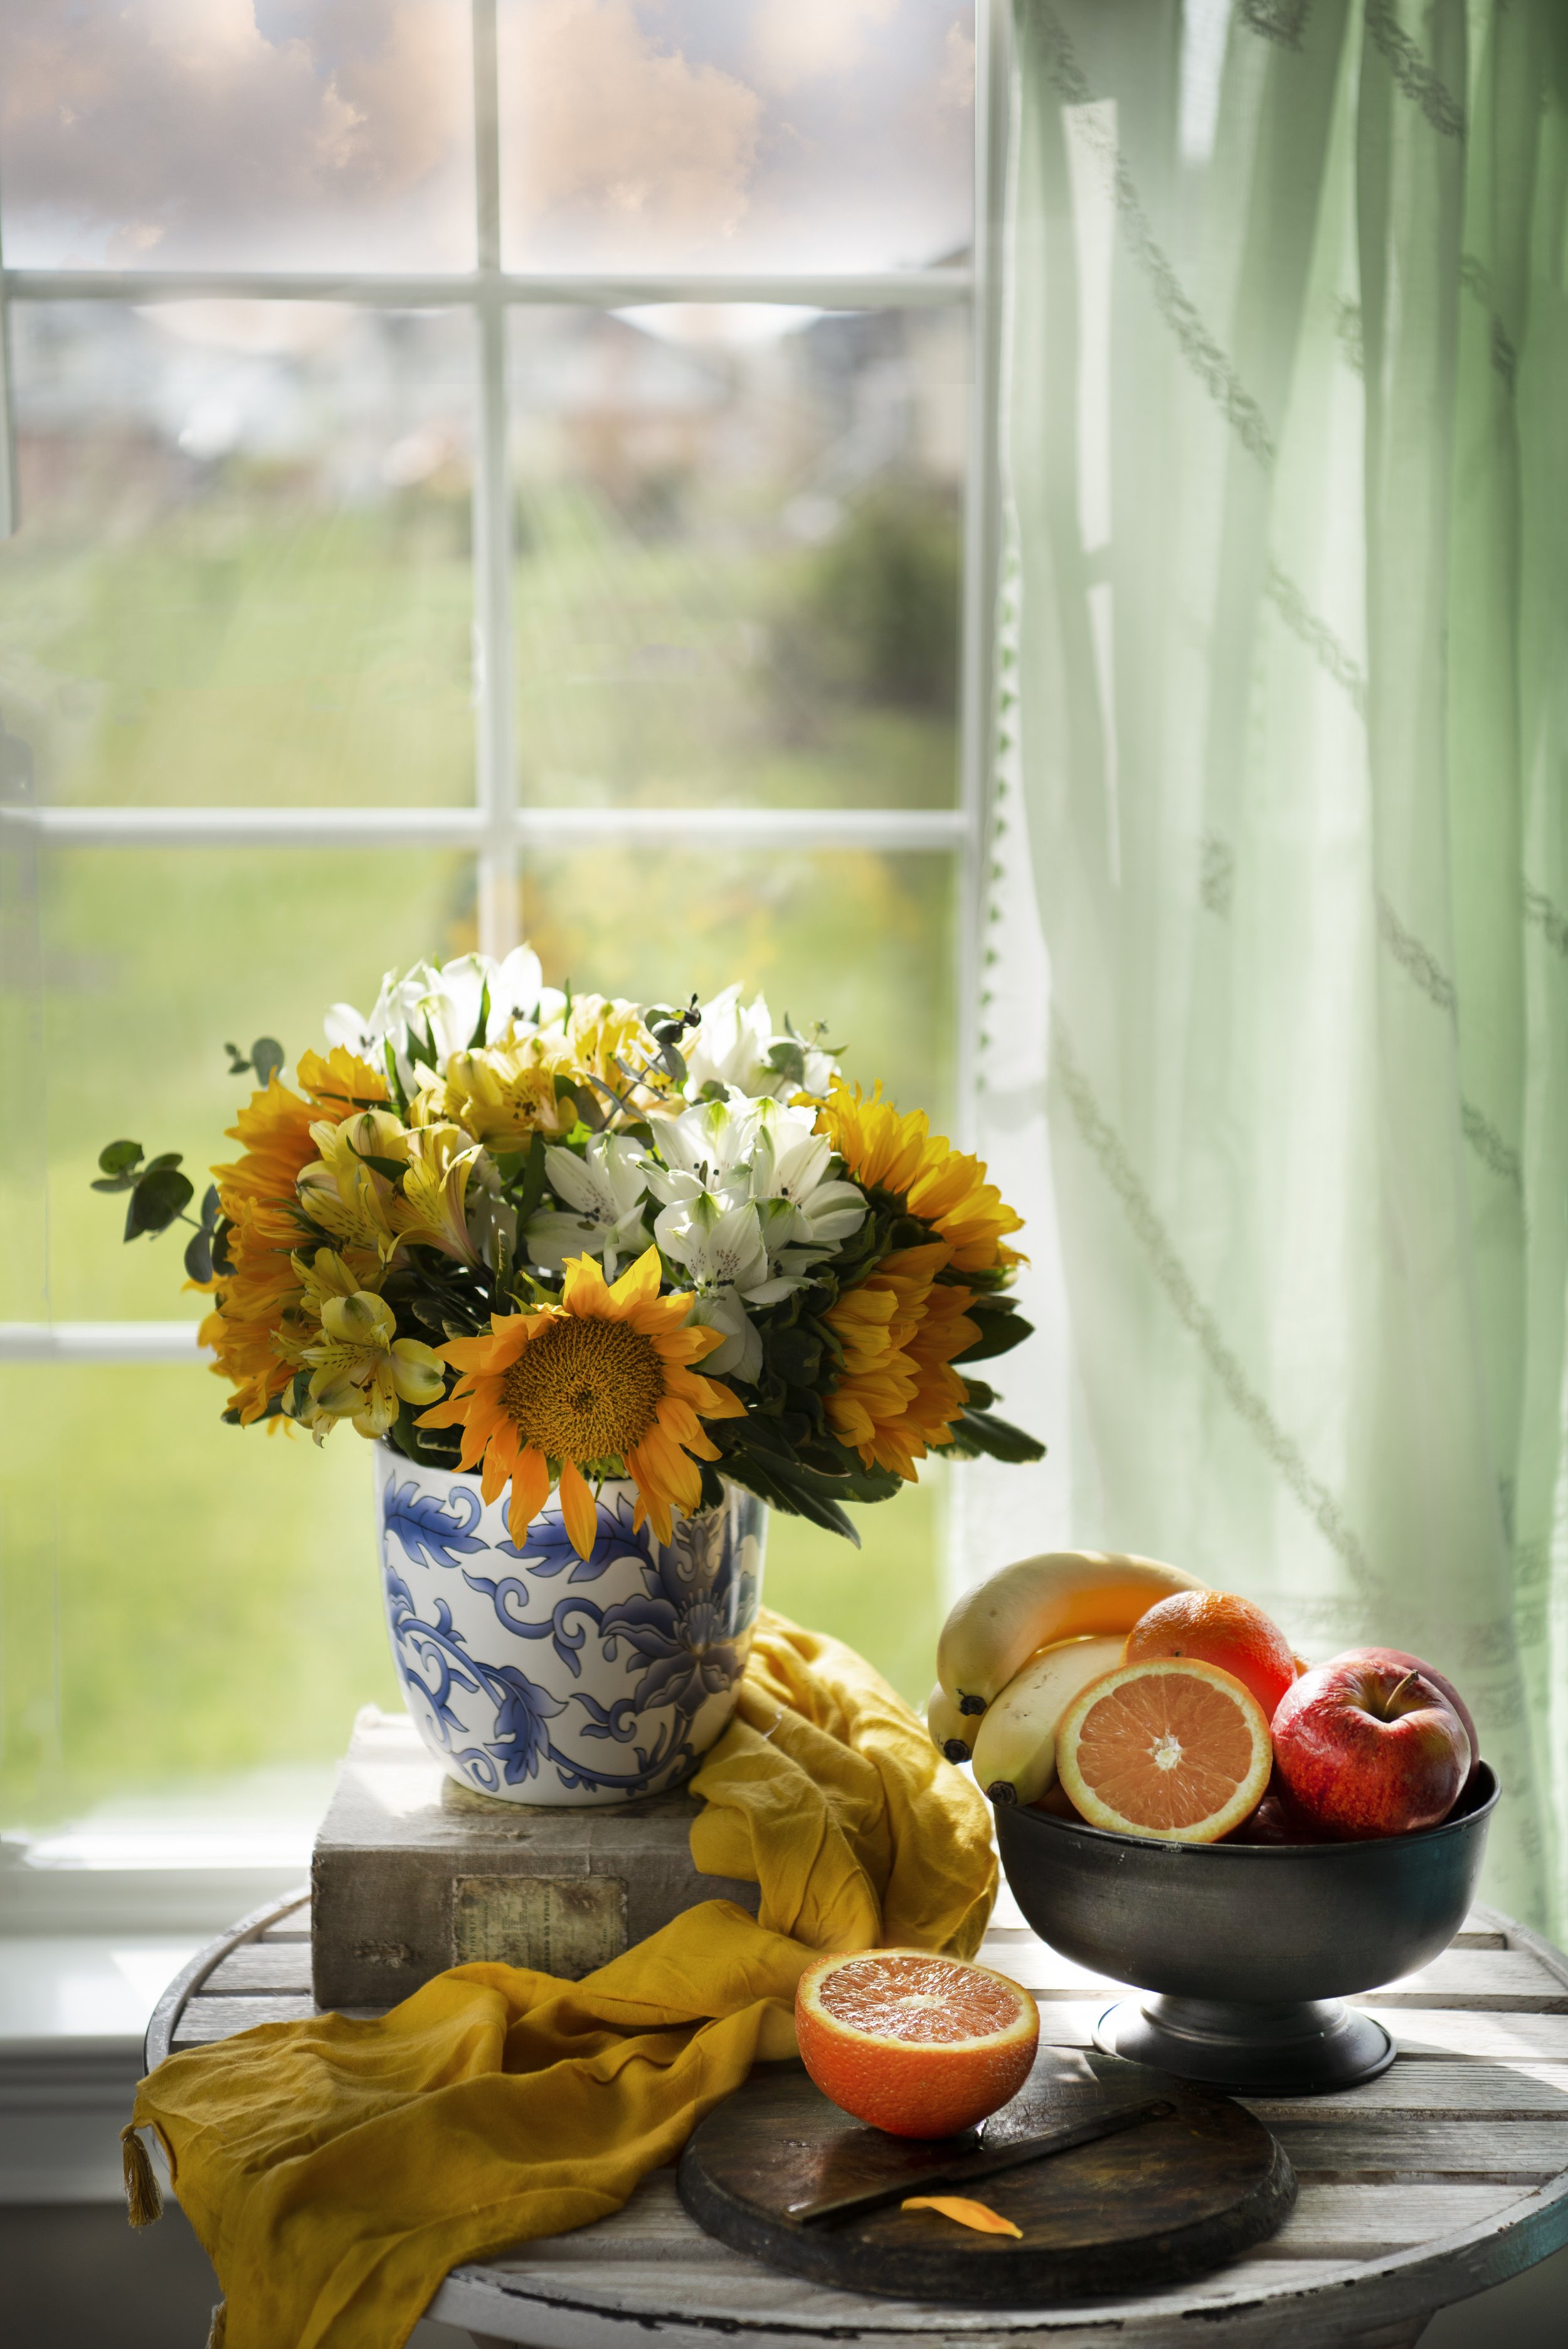 SunFlowers-Fruits-Spring-Window-SimiJois-2021-HR.jpg